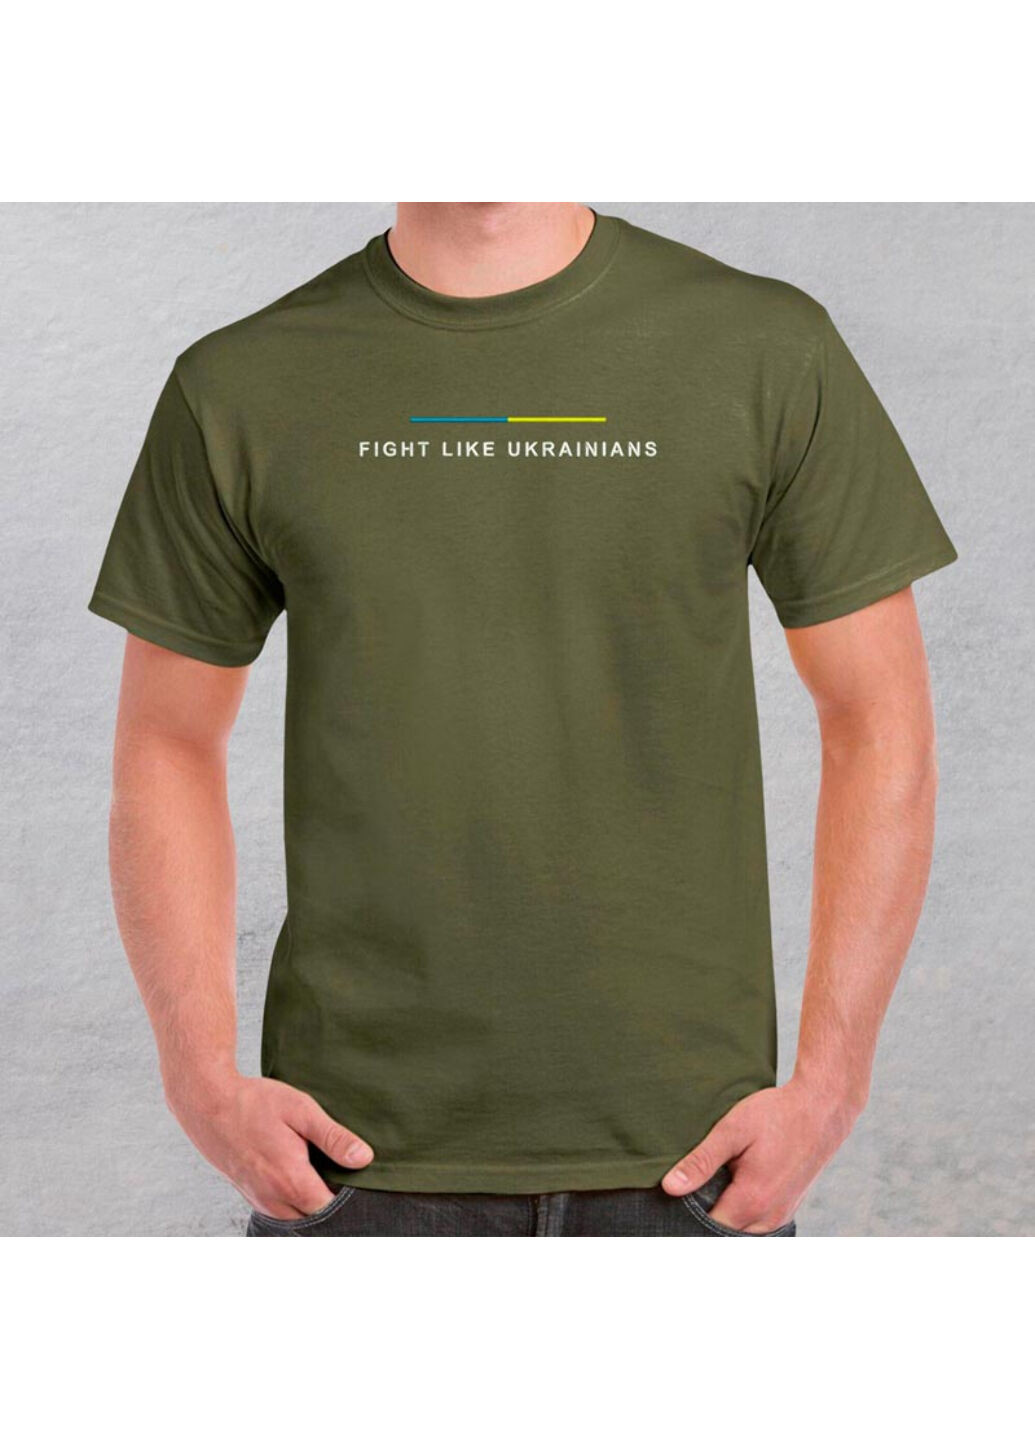 Хаки (оливковая) футболка з вишивкою fight like ukranians 01-1 мужская хаки xl No Brand